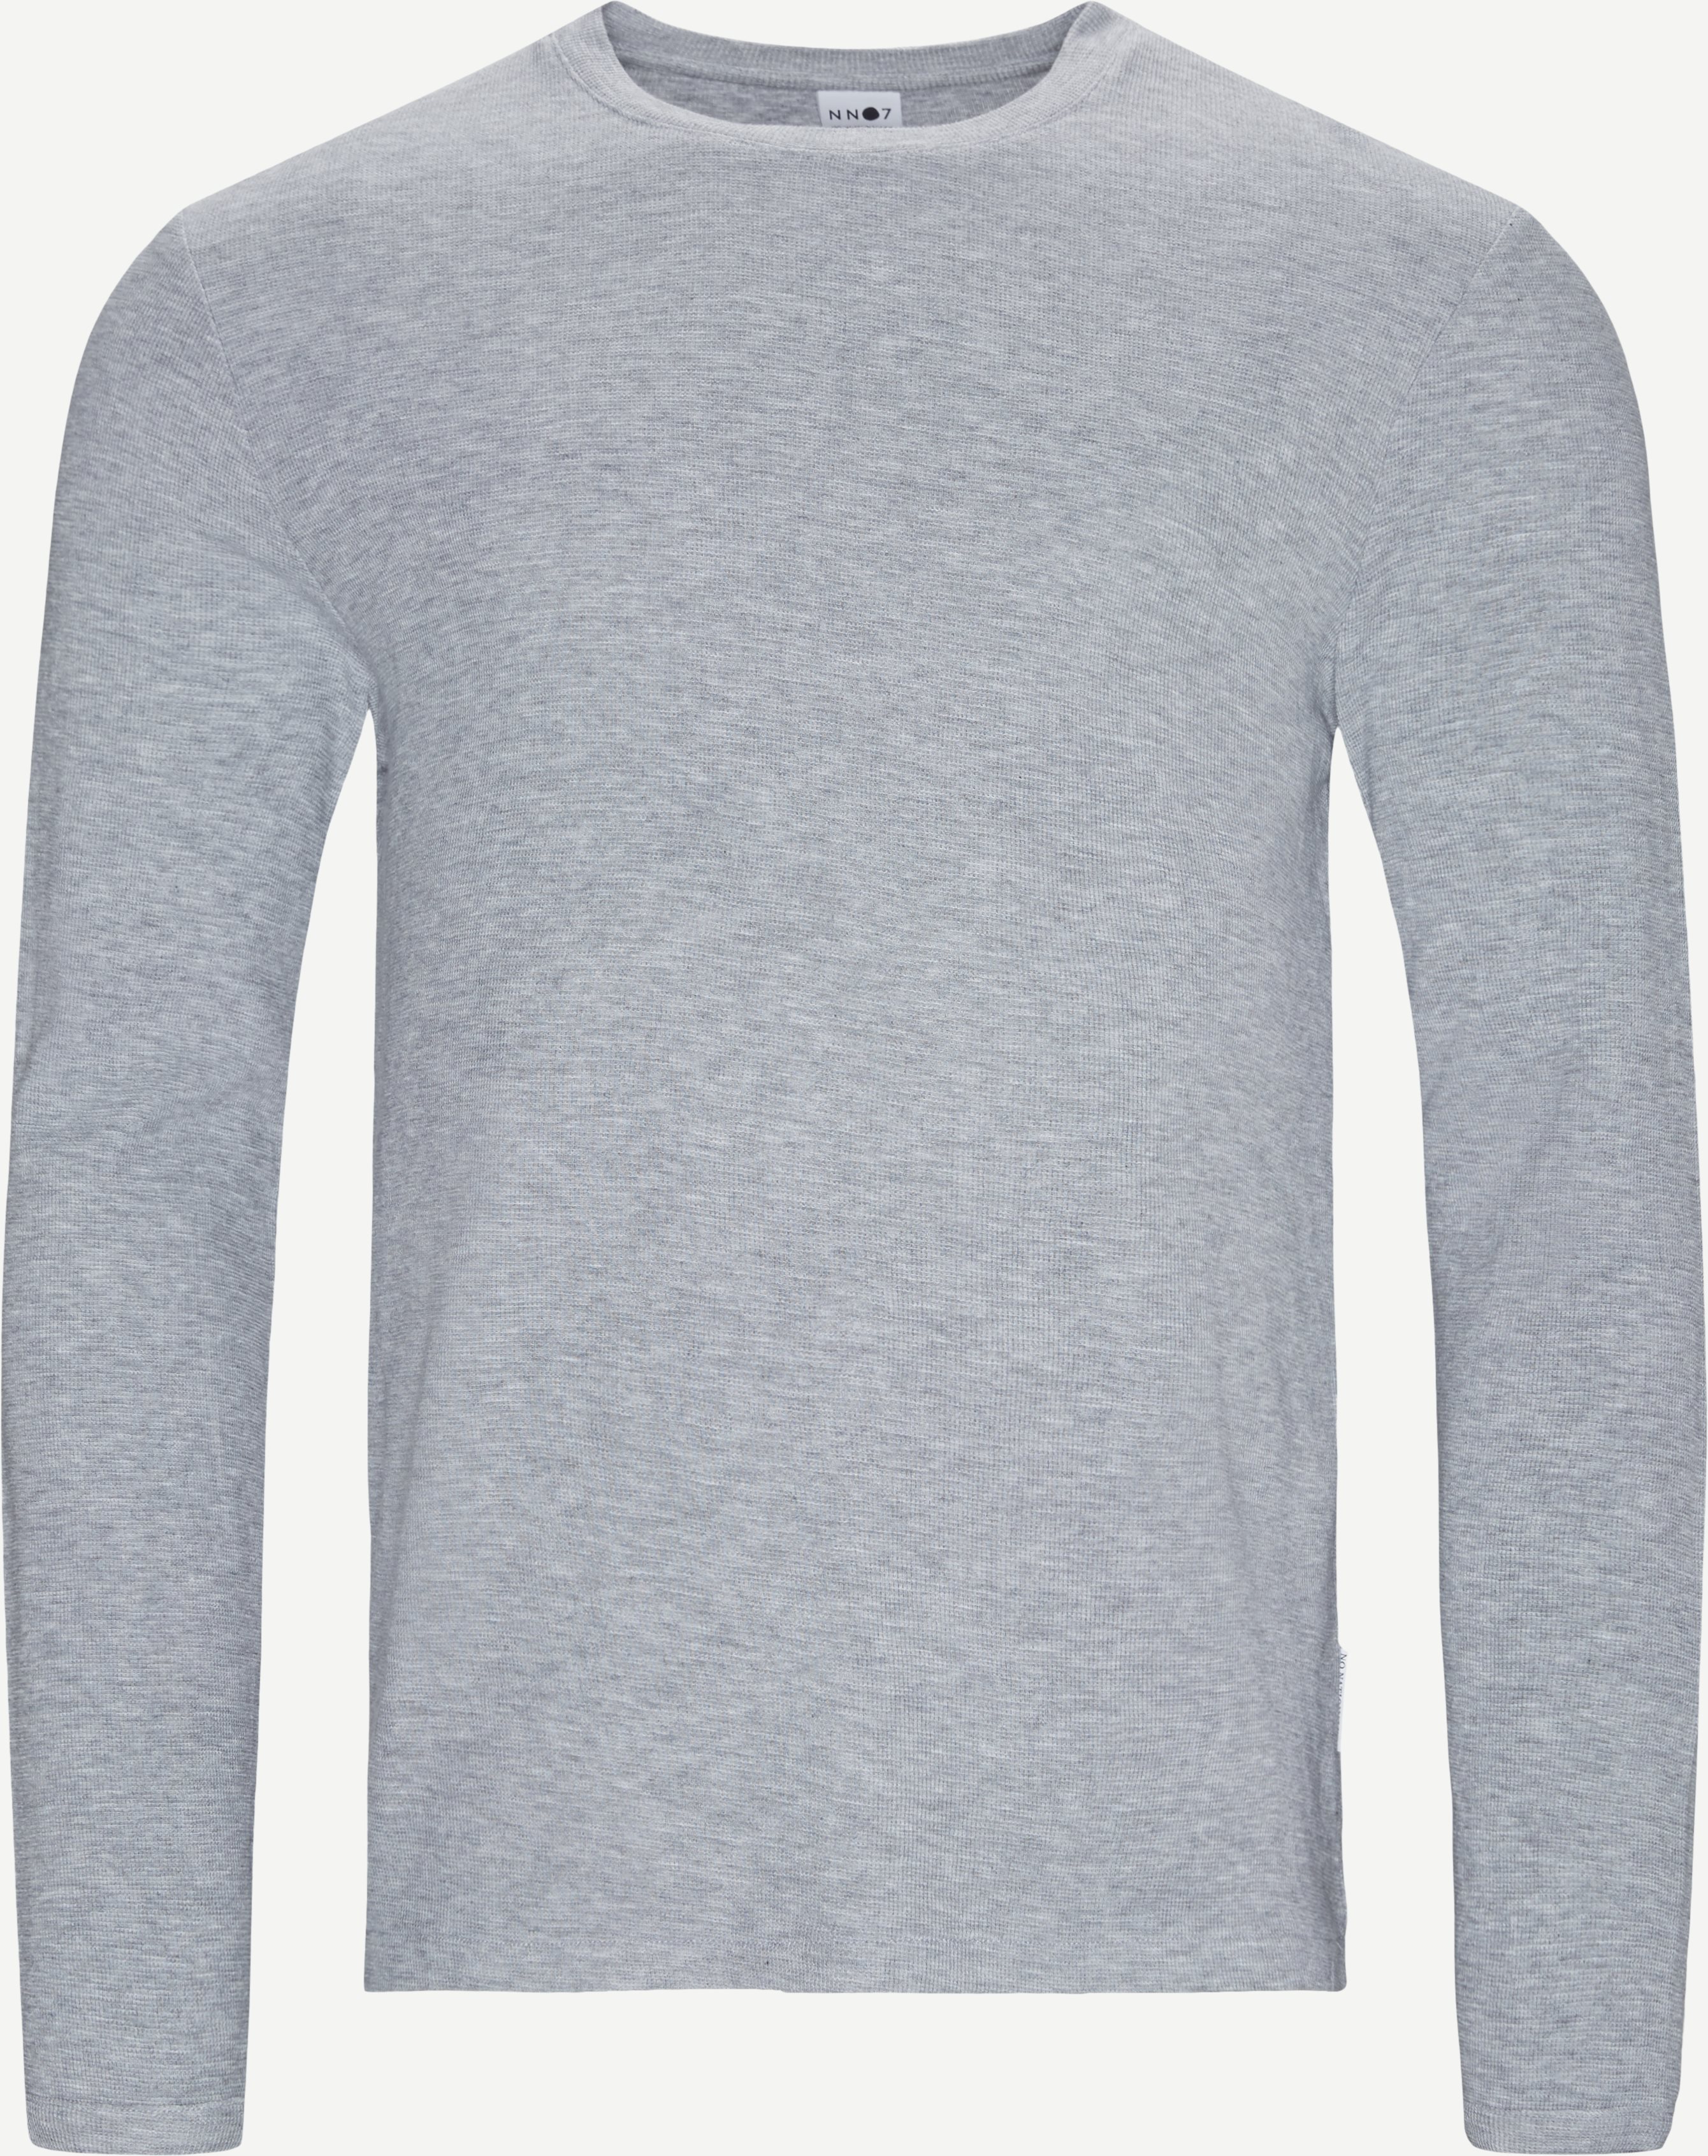 Clive Long Sleeve Shirt - T-shirts - Regular fit - Grey